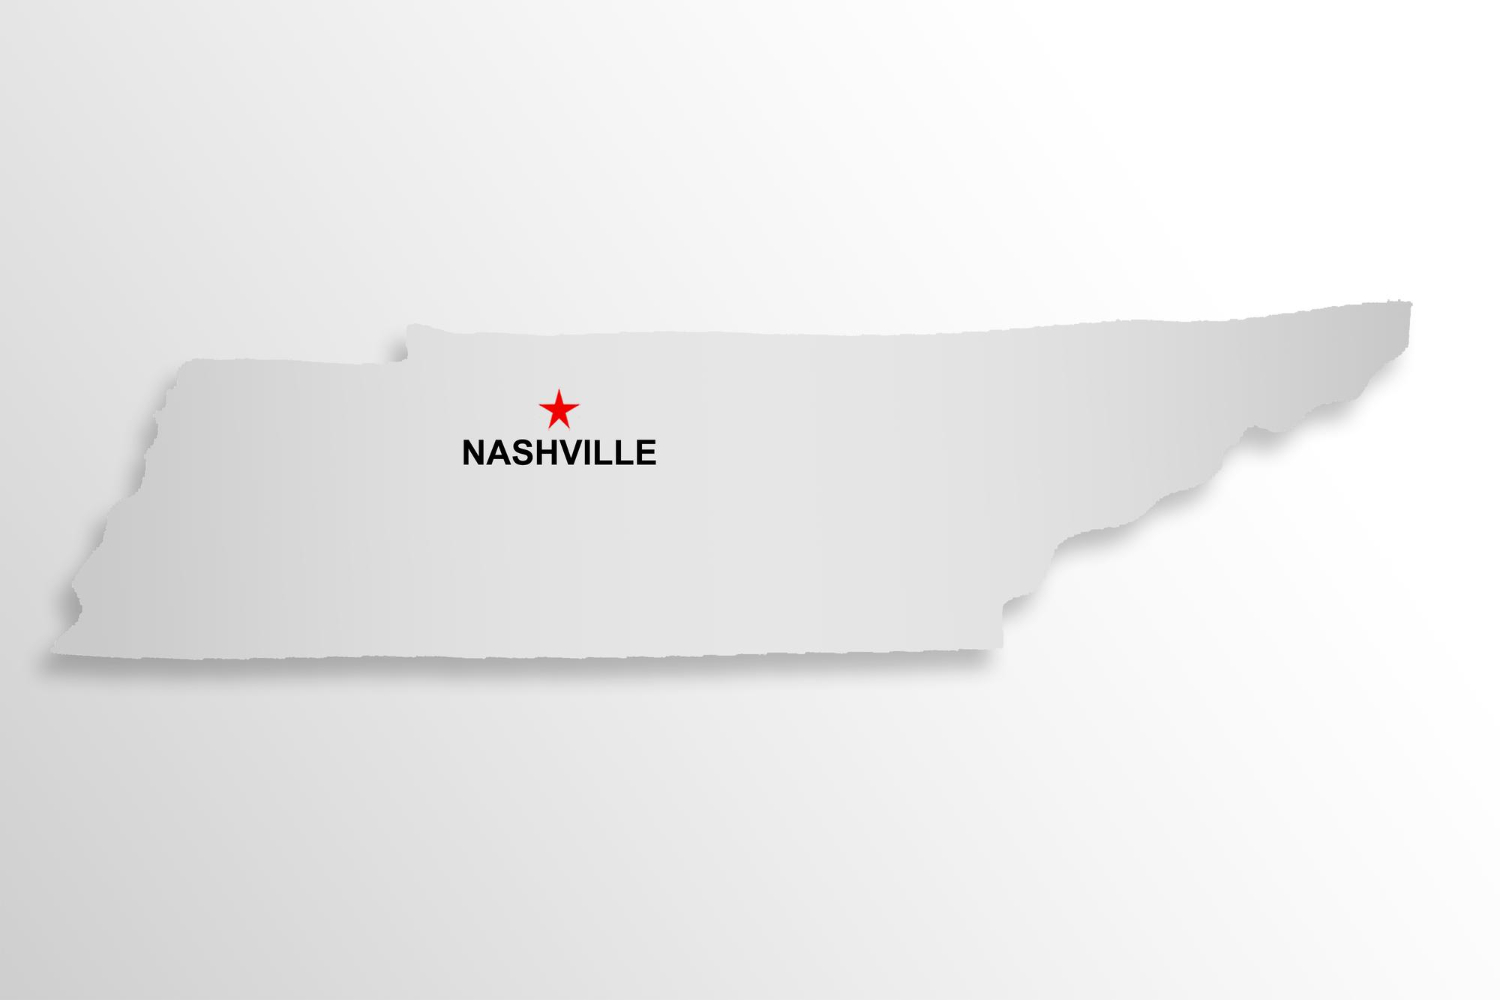 Nashville star on Tennessee map